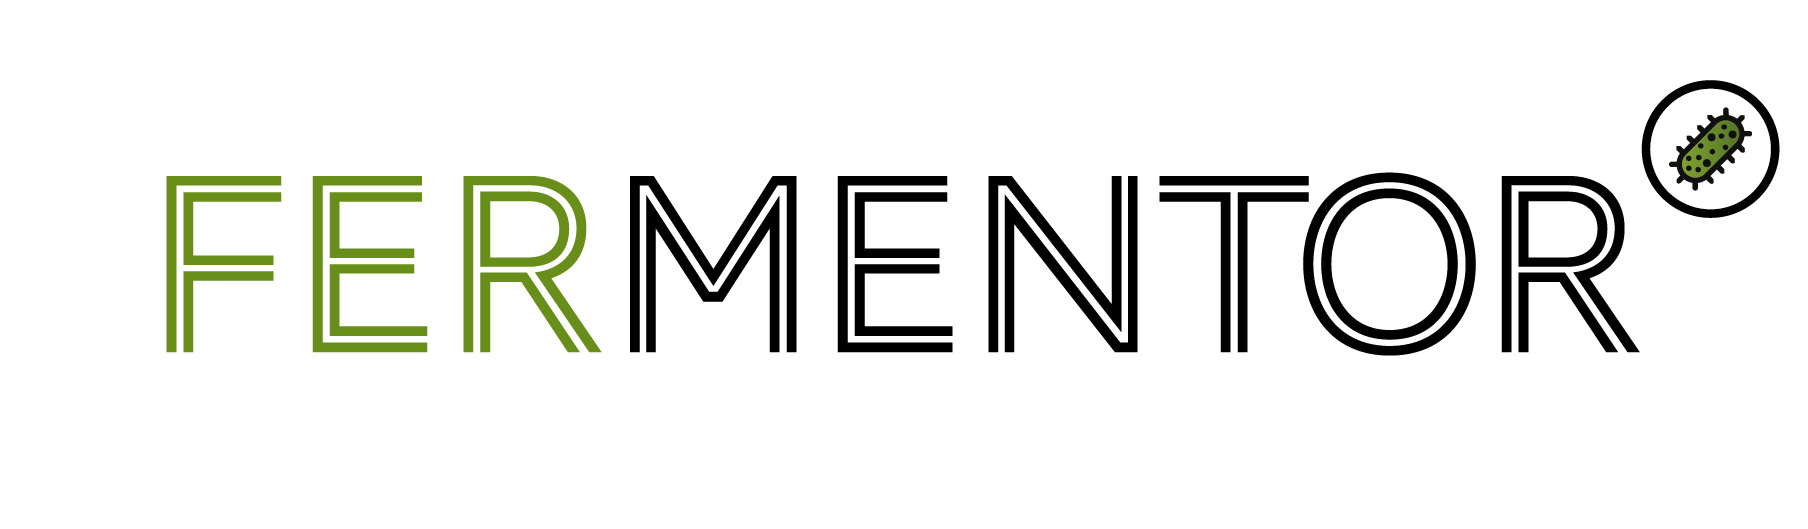 20200116_ID_FM_LogoFermentor_JPG